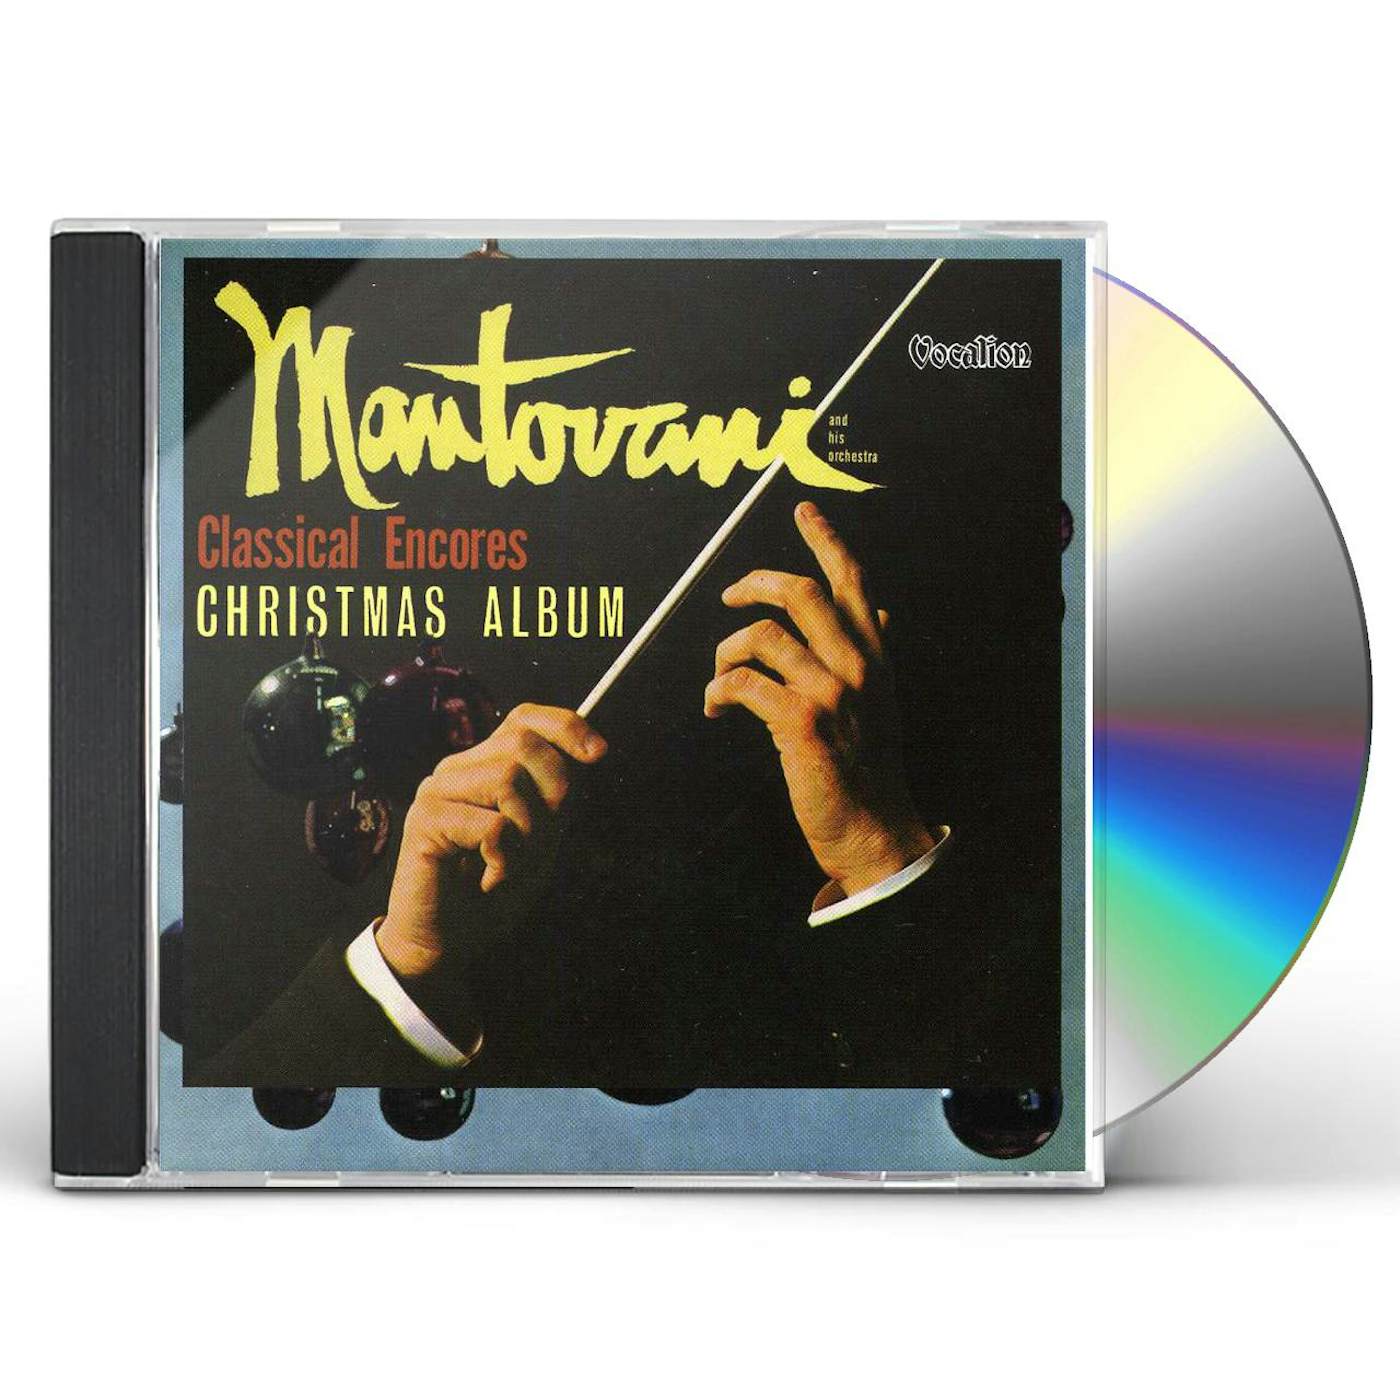 Mantovani & His Orchestra CLASSICAL ENCORES & CHRISTMAS ALBUM CD